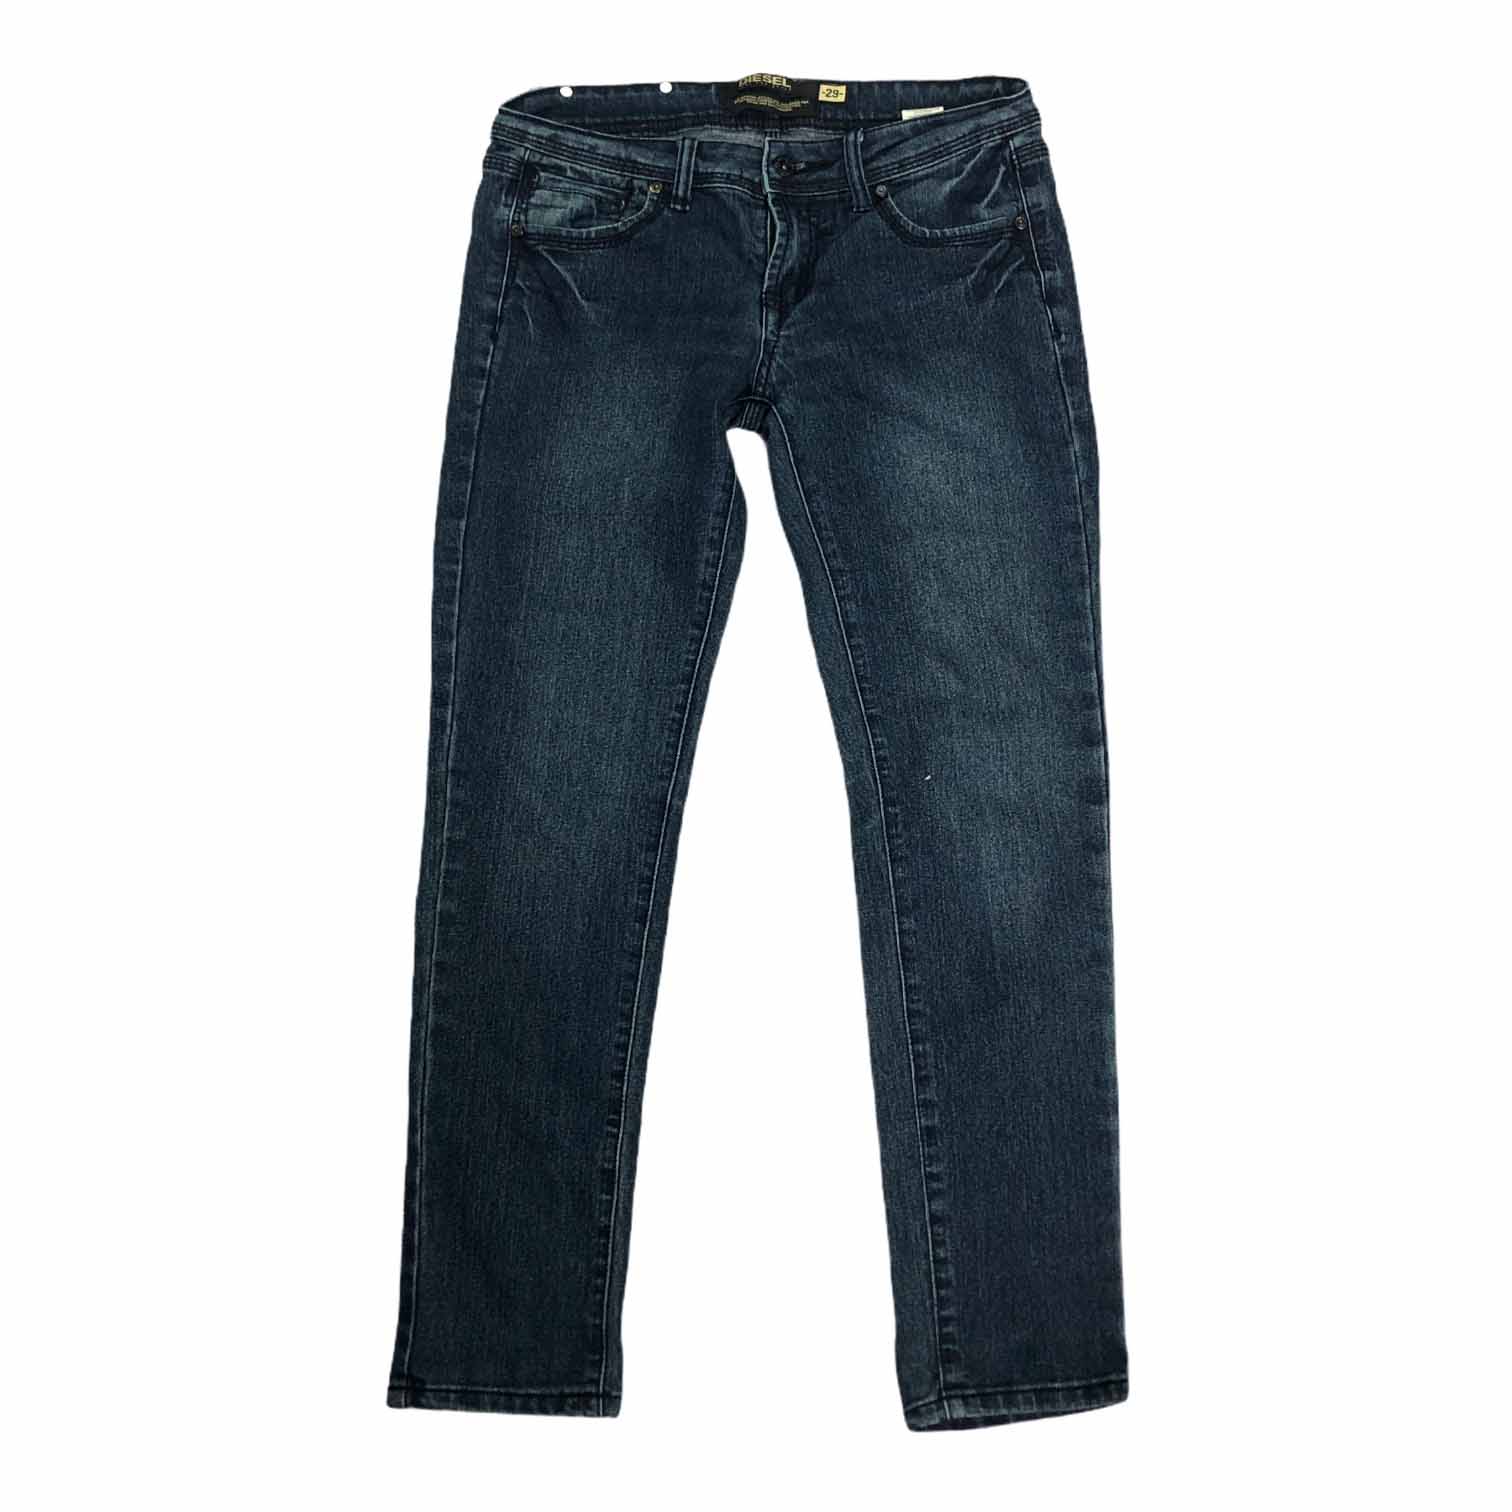 [Diesel] Indigo Washed Skinny Pants - Size 29